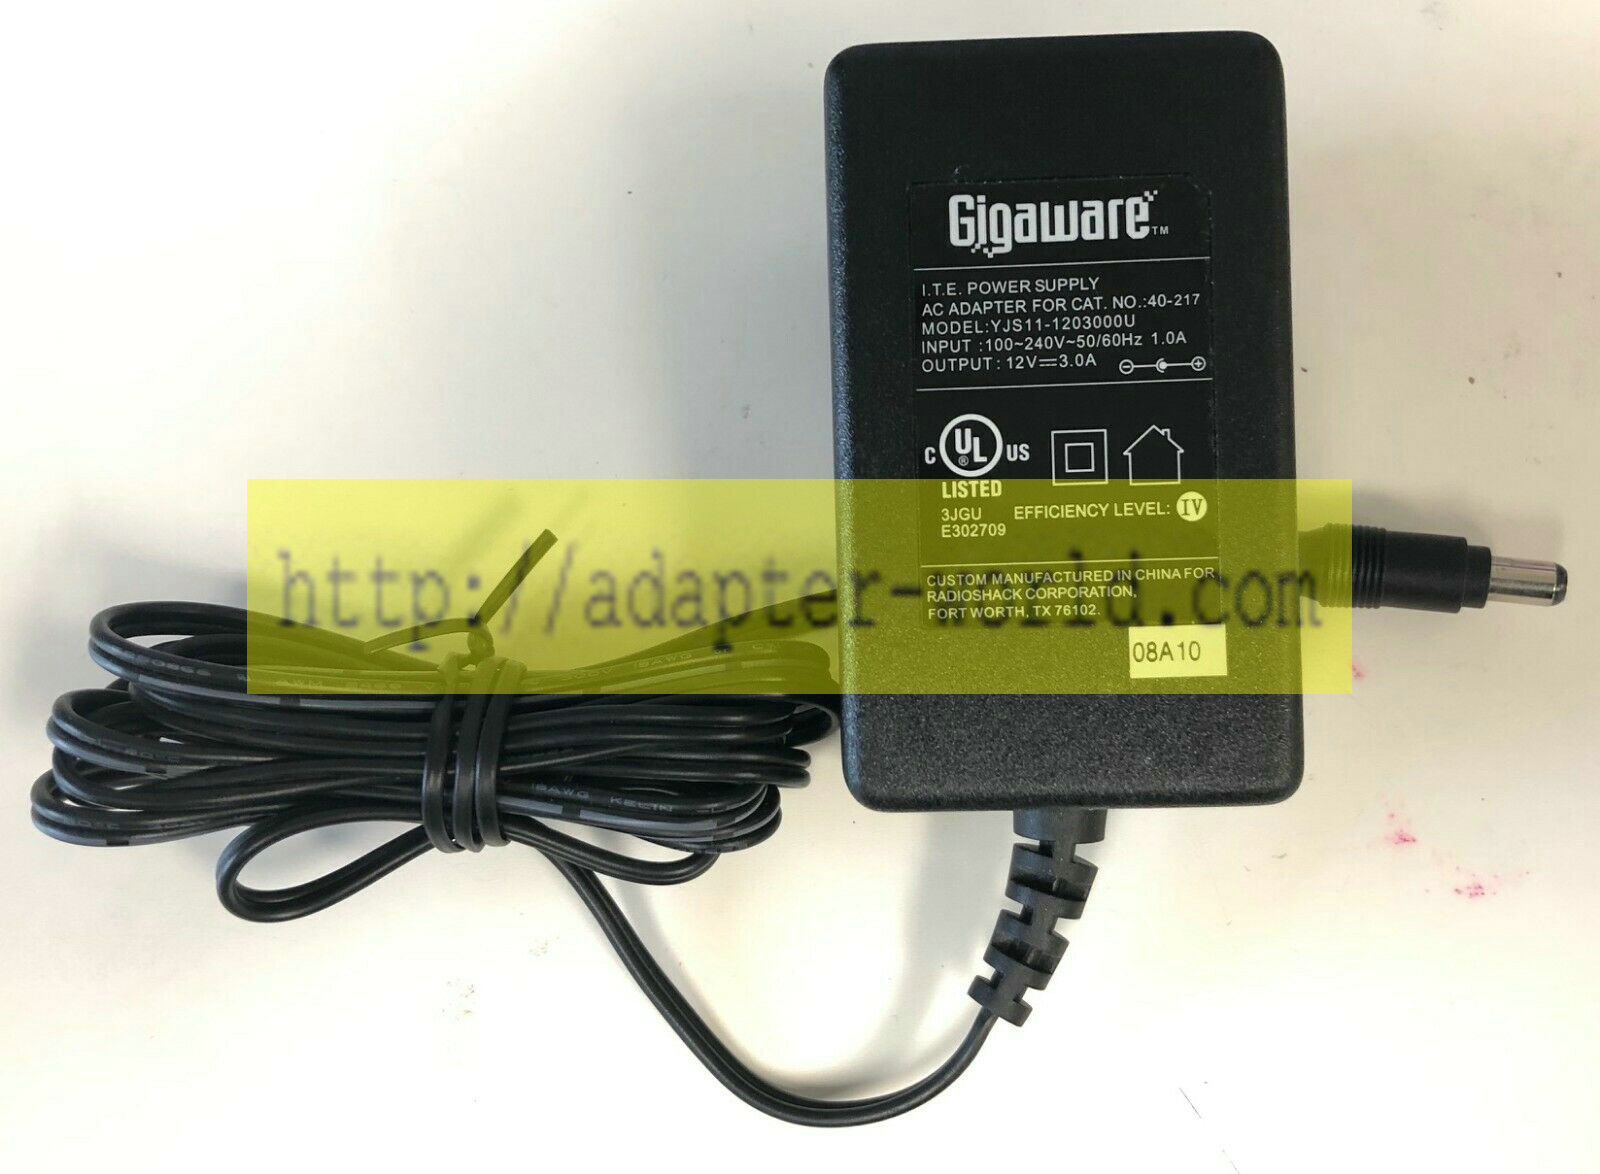 *Brand NEW* Gigaware YJS11-1203000U 40-217 I.T.E.12V 3.0A AC DC Adapter POWER SUPPLY